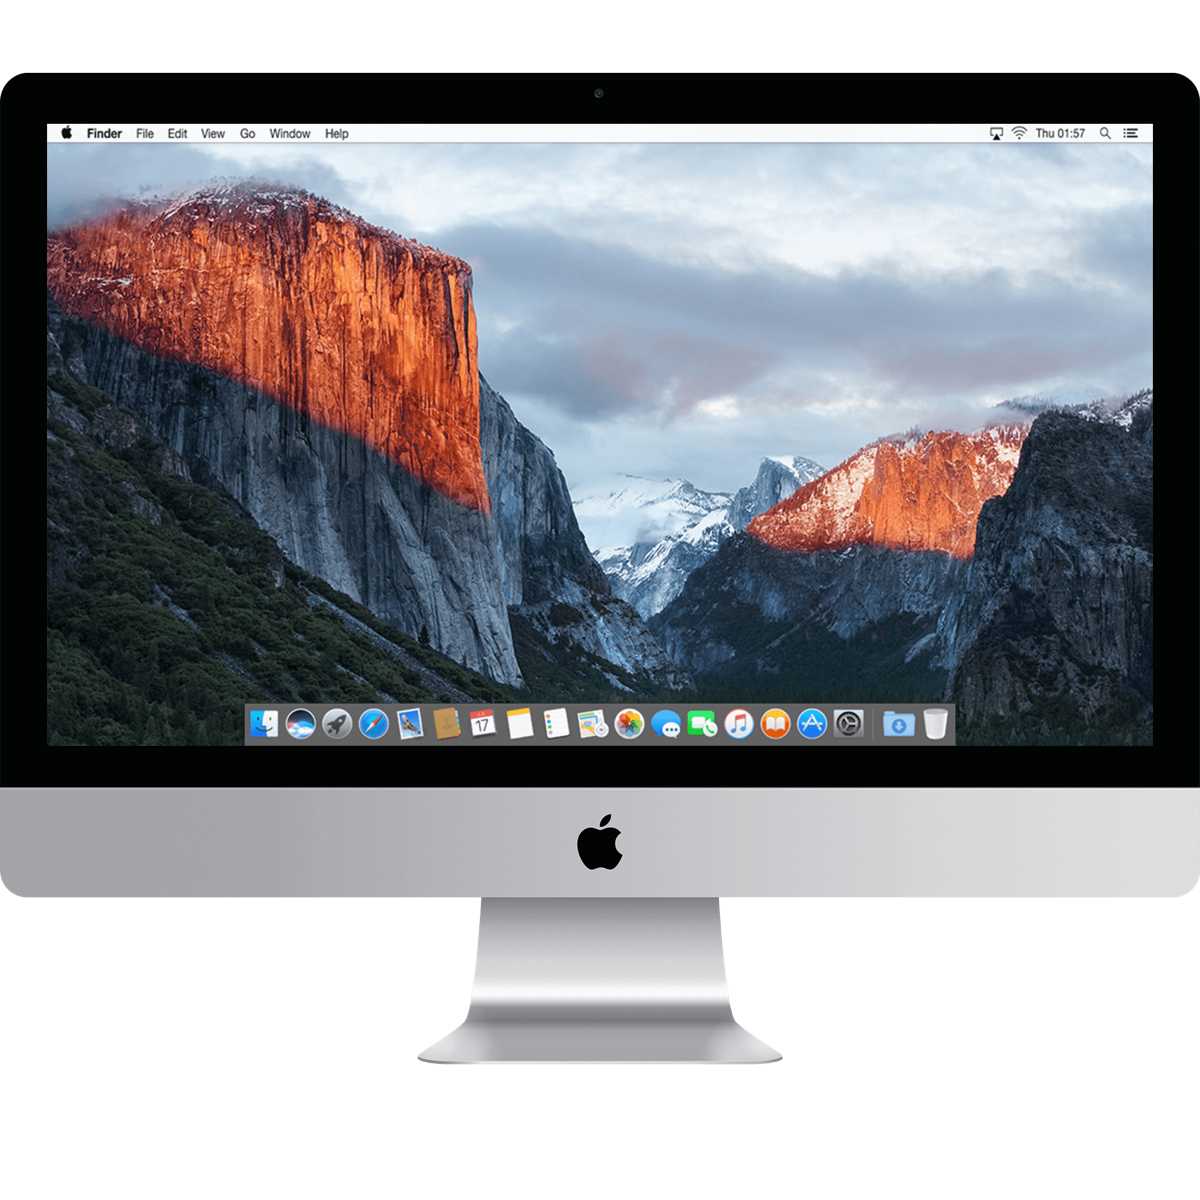 Refurbished iMac 27" (5K) i7 4.0 8GB 256GB - test-product-media-liquid1